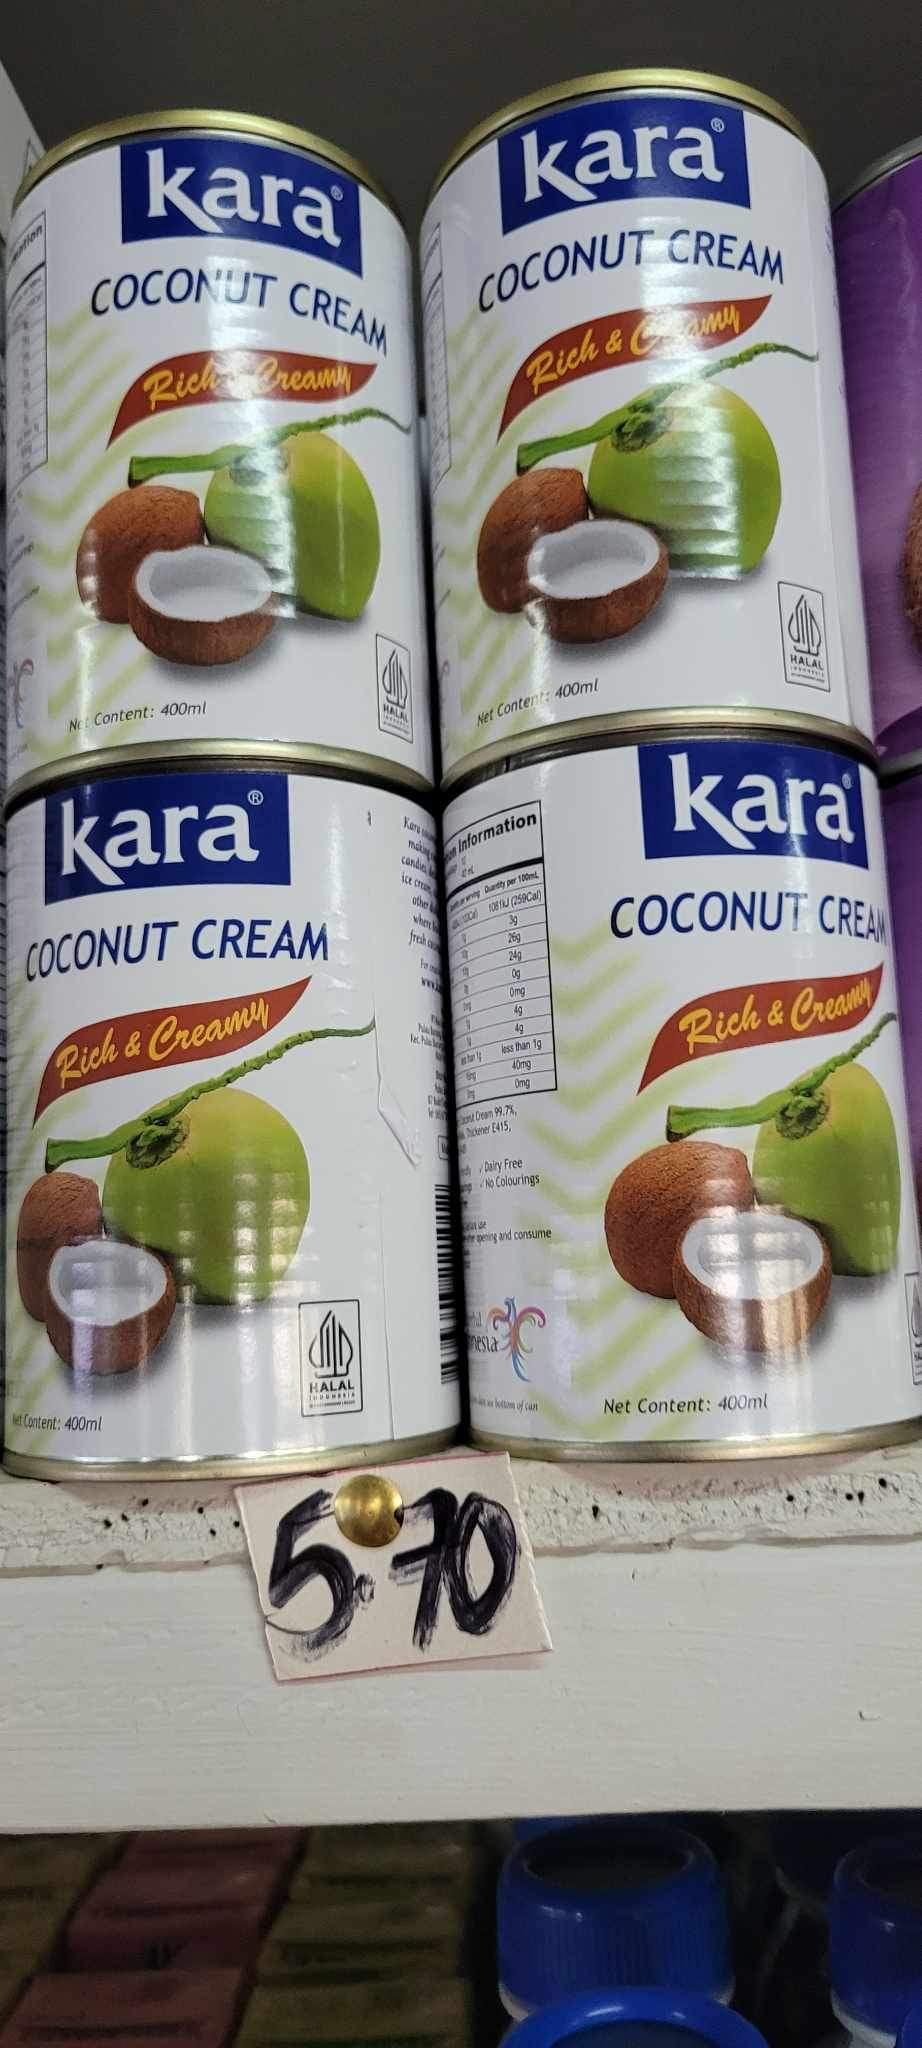 Kara coconut cream